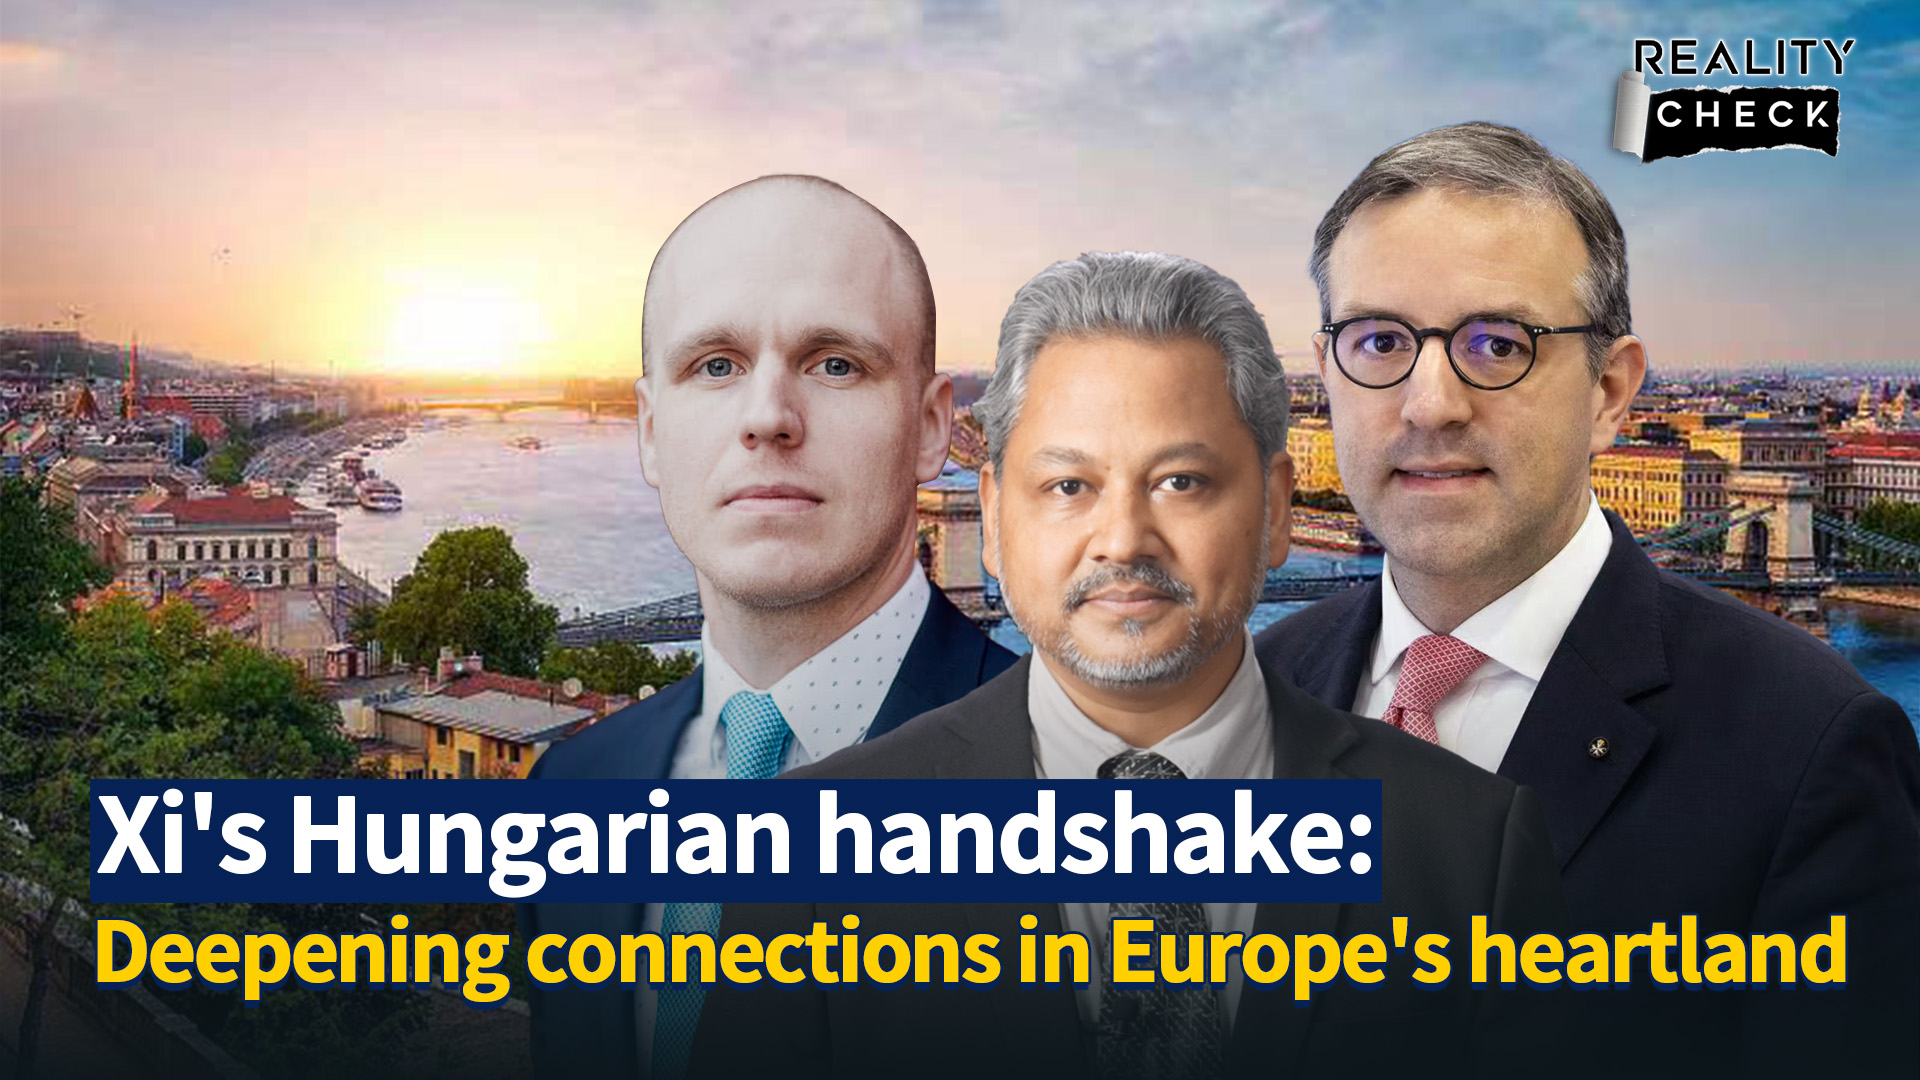 Hungarian handshake: Xi's visit deepens links in Europe's heartland